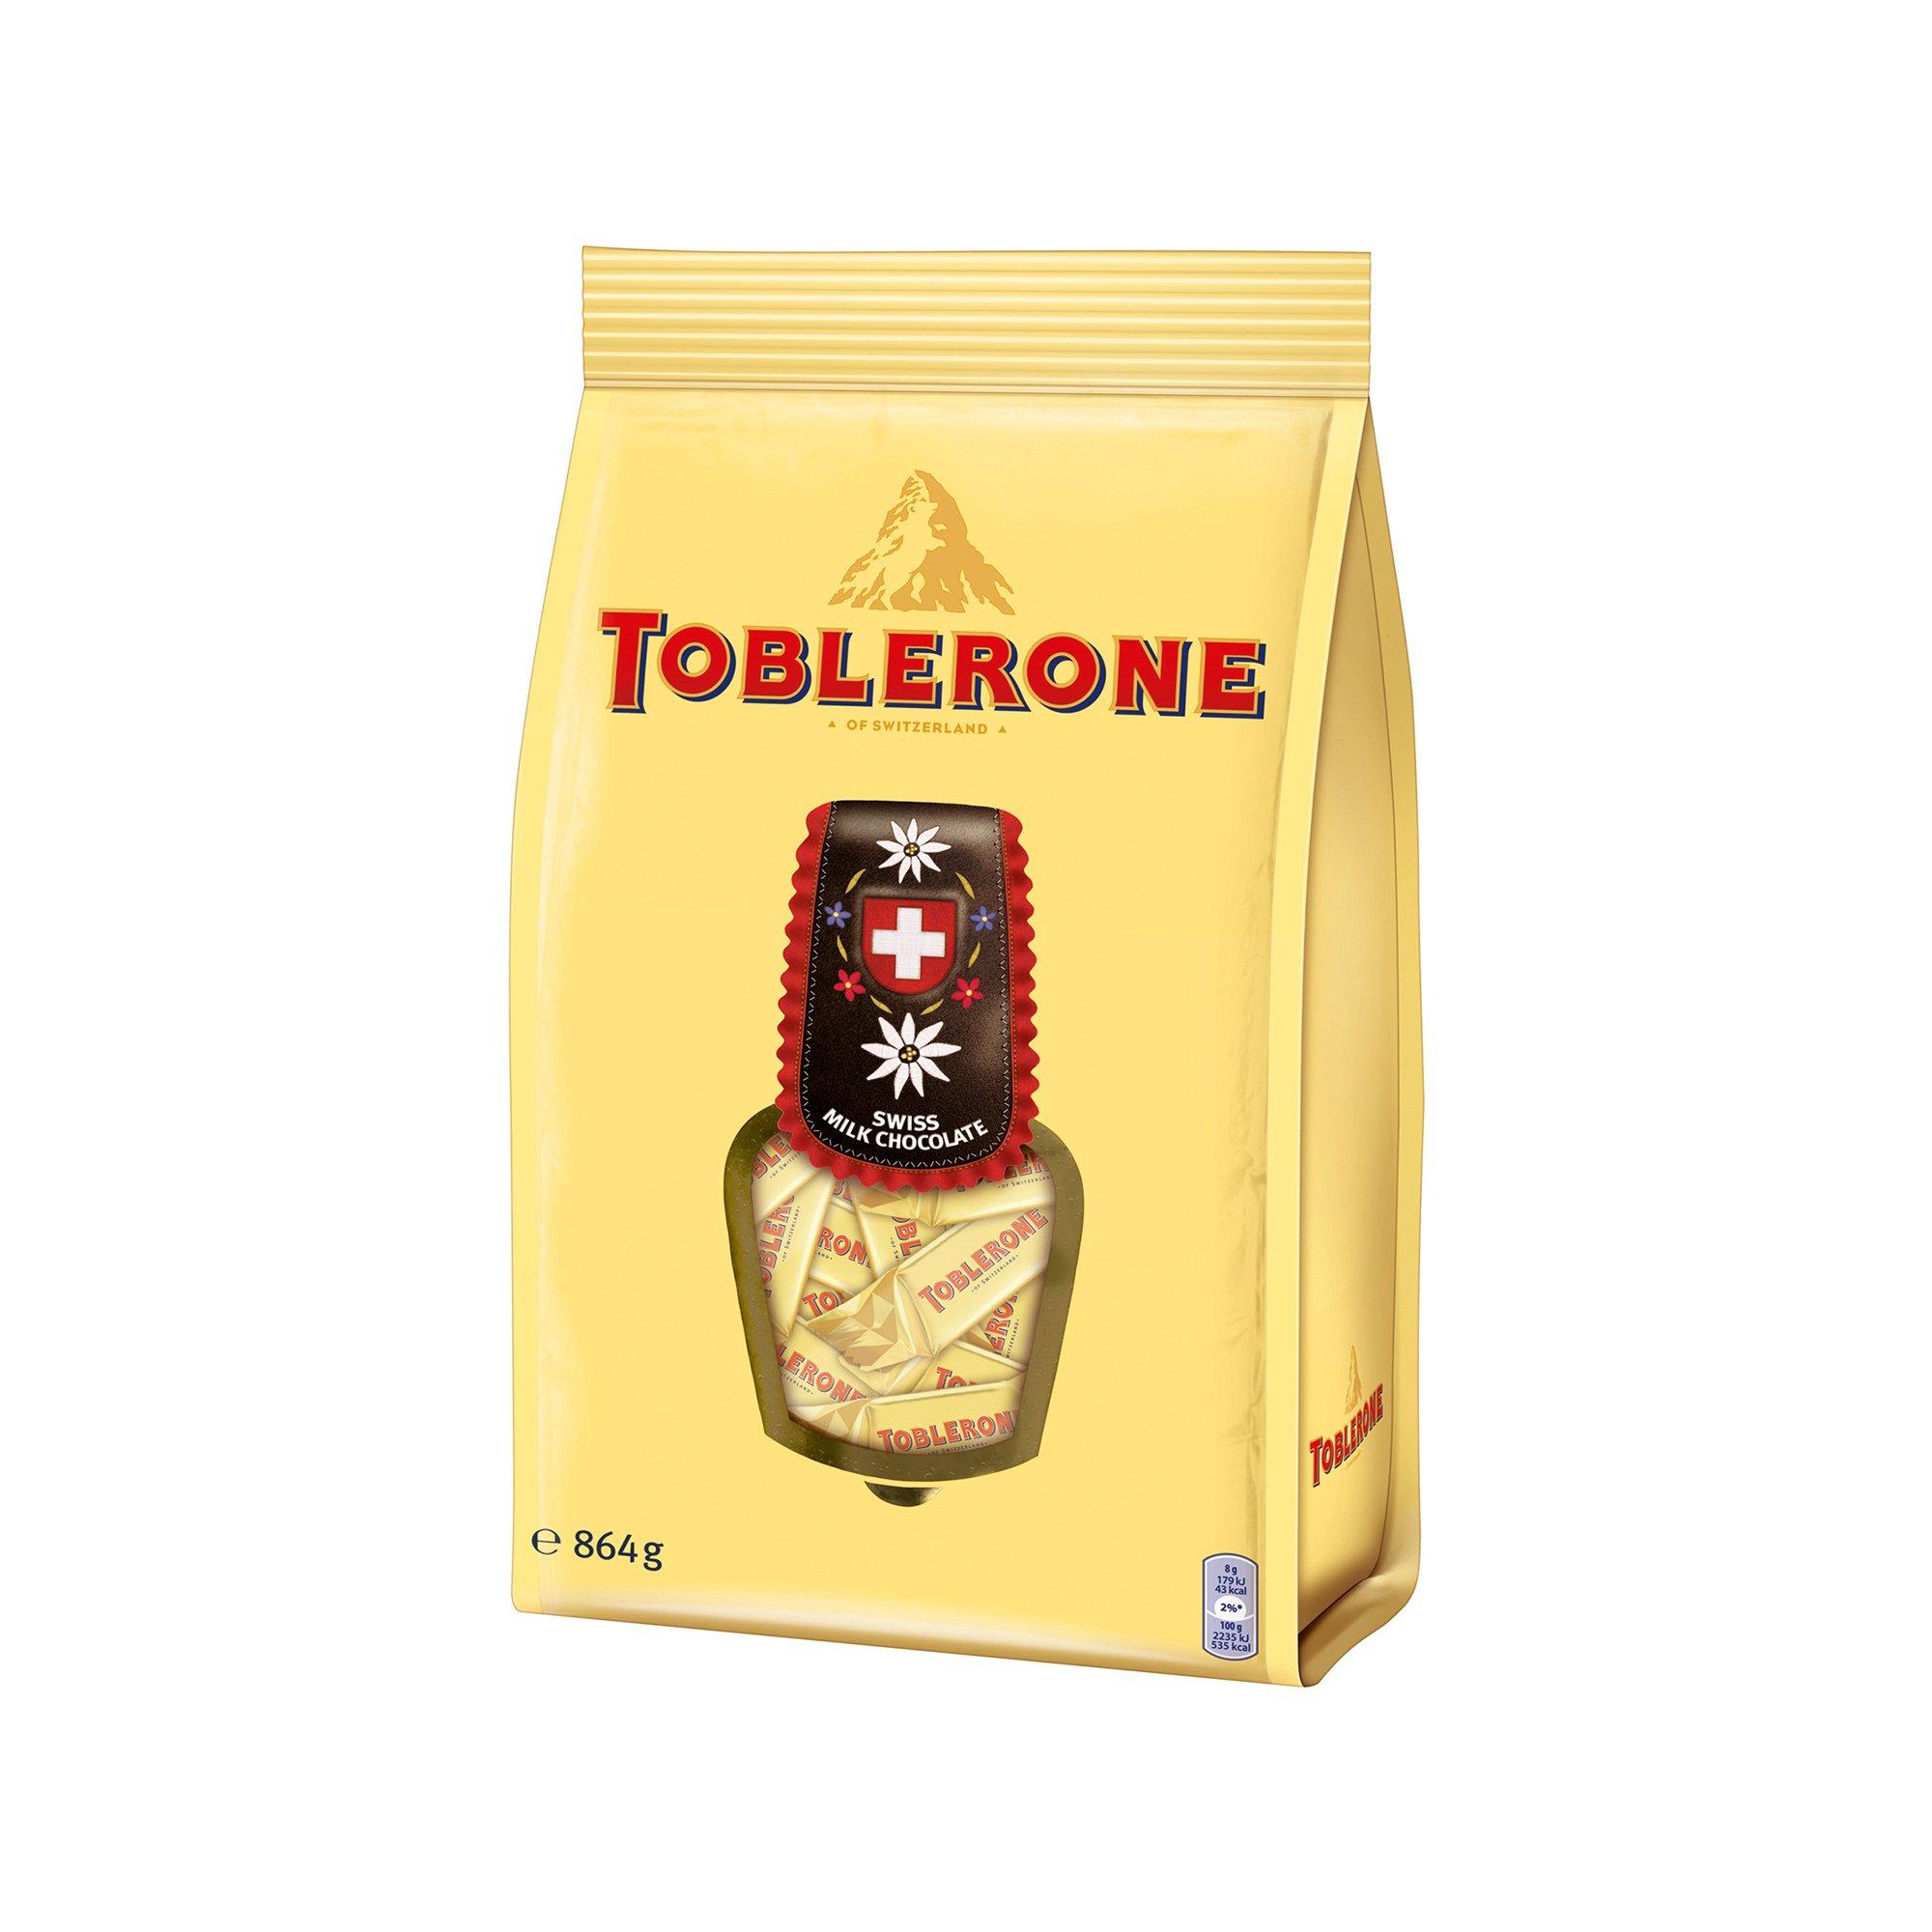 Calendrier de l'Avent Toblerone, Chocolat suisse